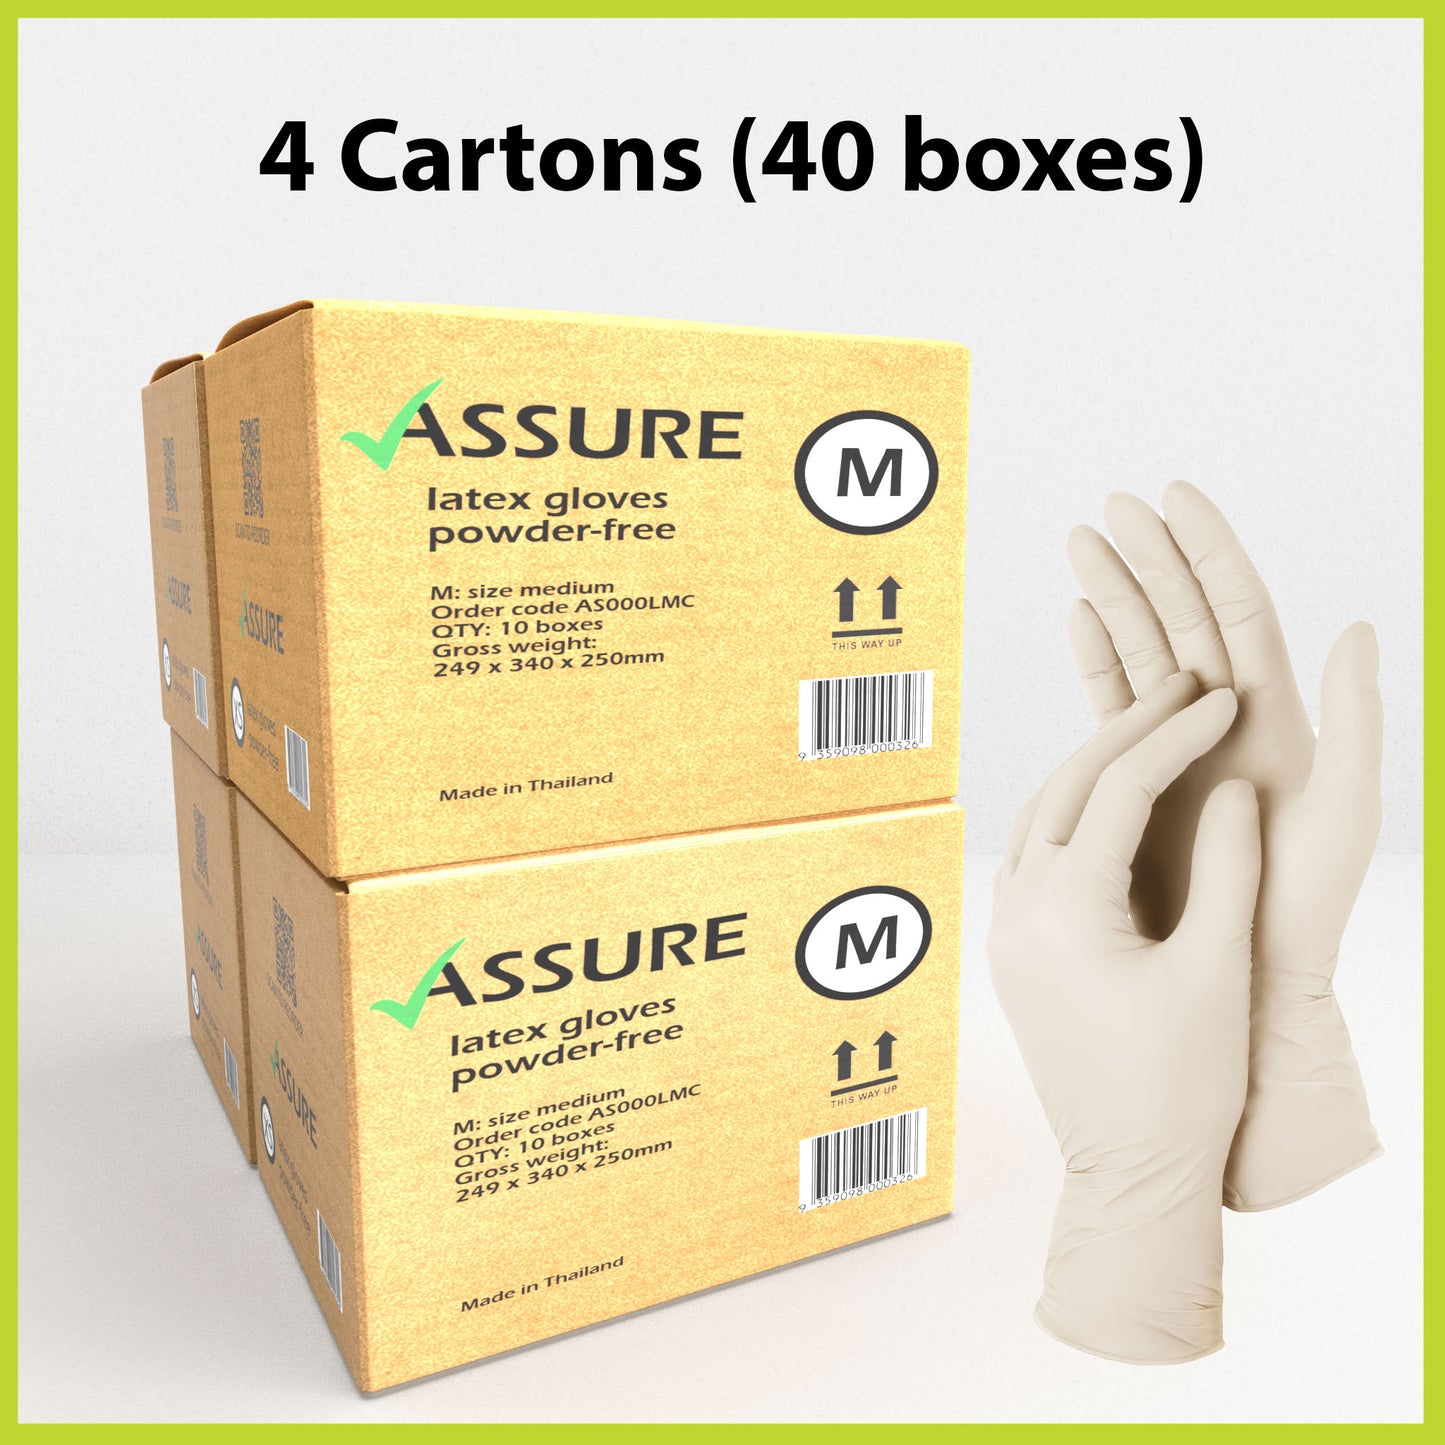 Bulk Saver - ASSURE Latex Gloves, 4 cartons @ $5.50 per box